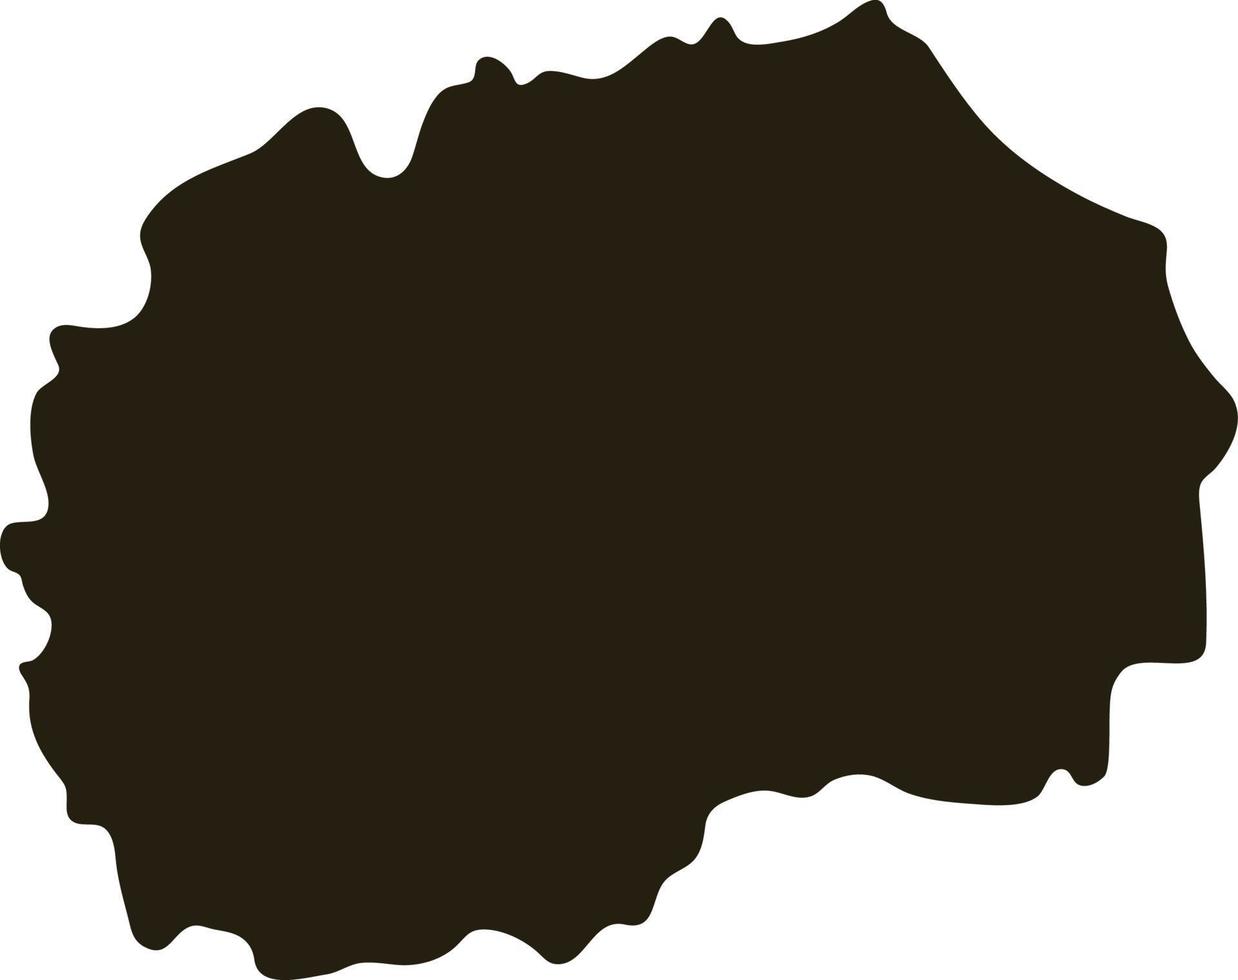 mapa de macedonia. ilustración de vector de mapa negro sólido